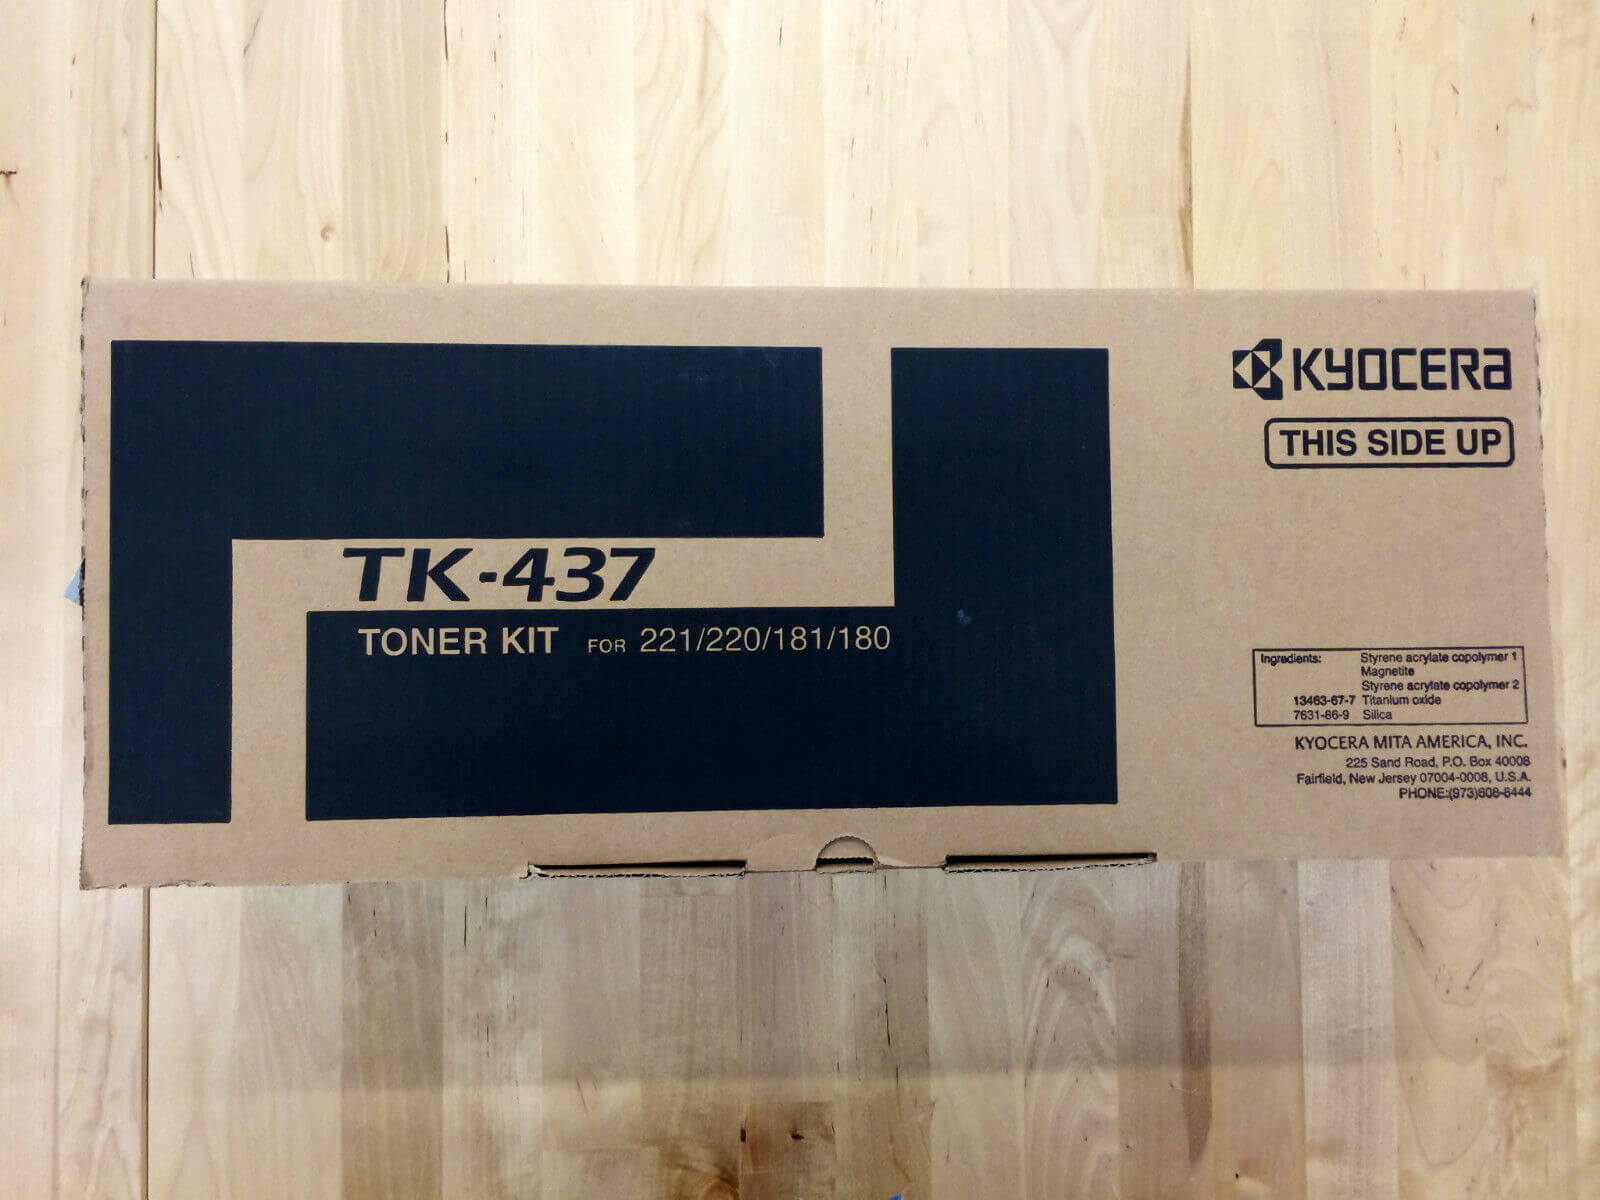 Genuine Kyocera TK-437 Toner Kit for 221-220-181-180, Same Day Shipping - copier-clearance-center